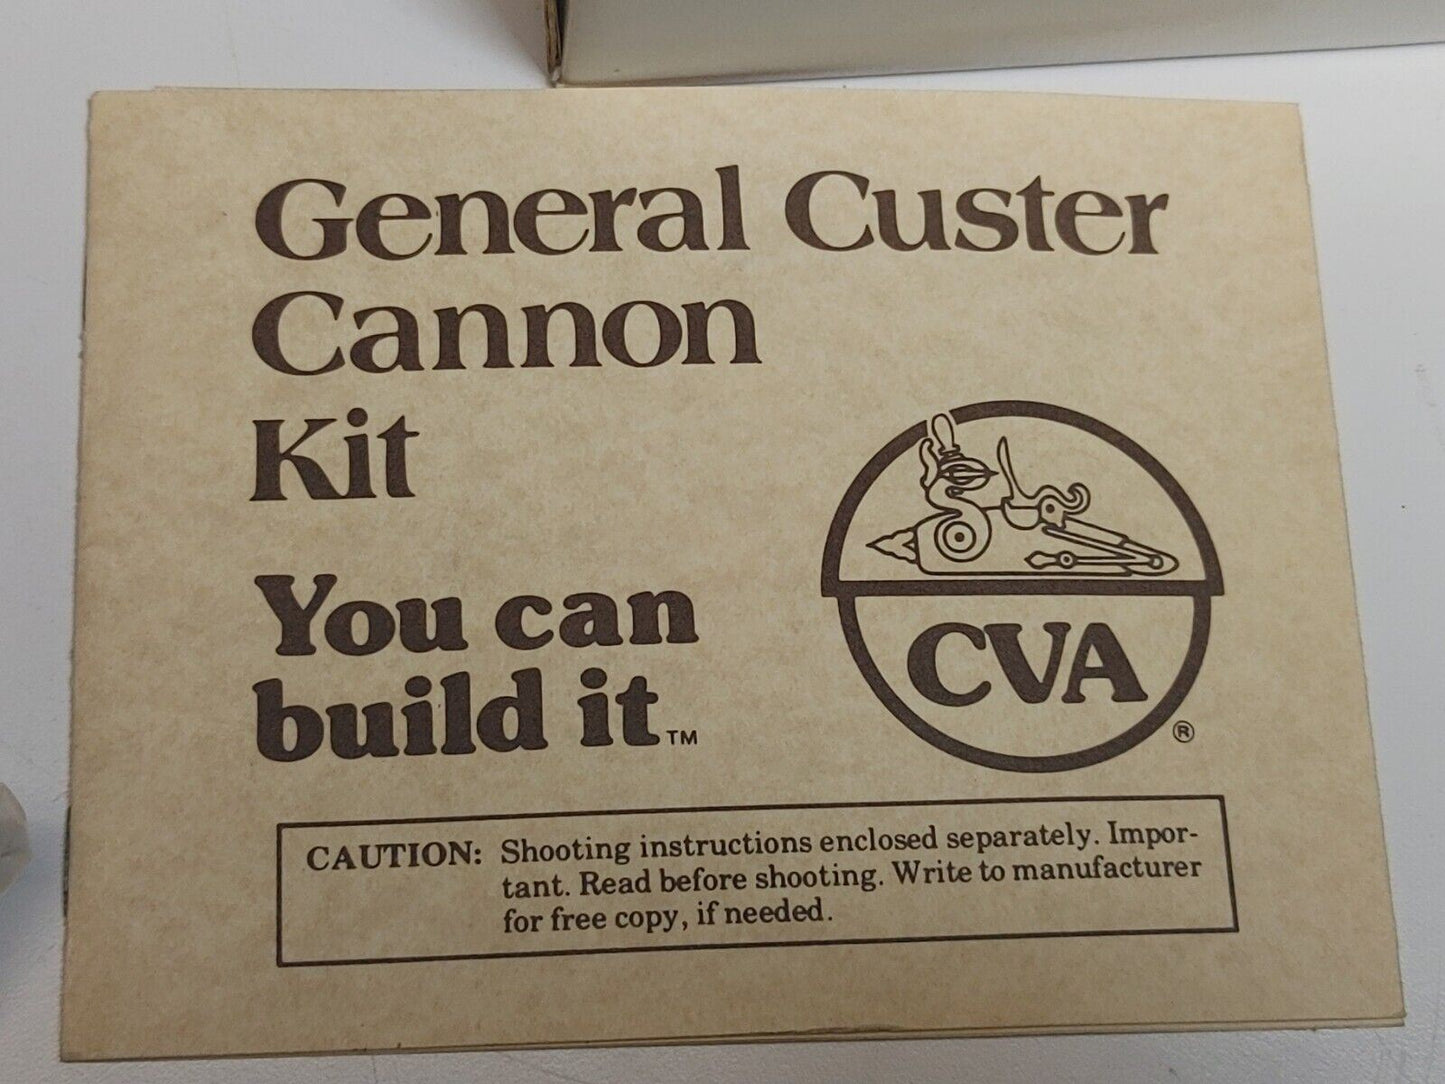 NOS GENERAL CUSTER - CANNON KIT CONNECTICUT VALLEY ARMS CVA 1980 (Rare Model)